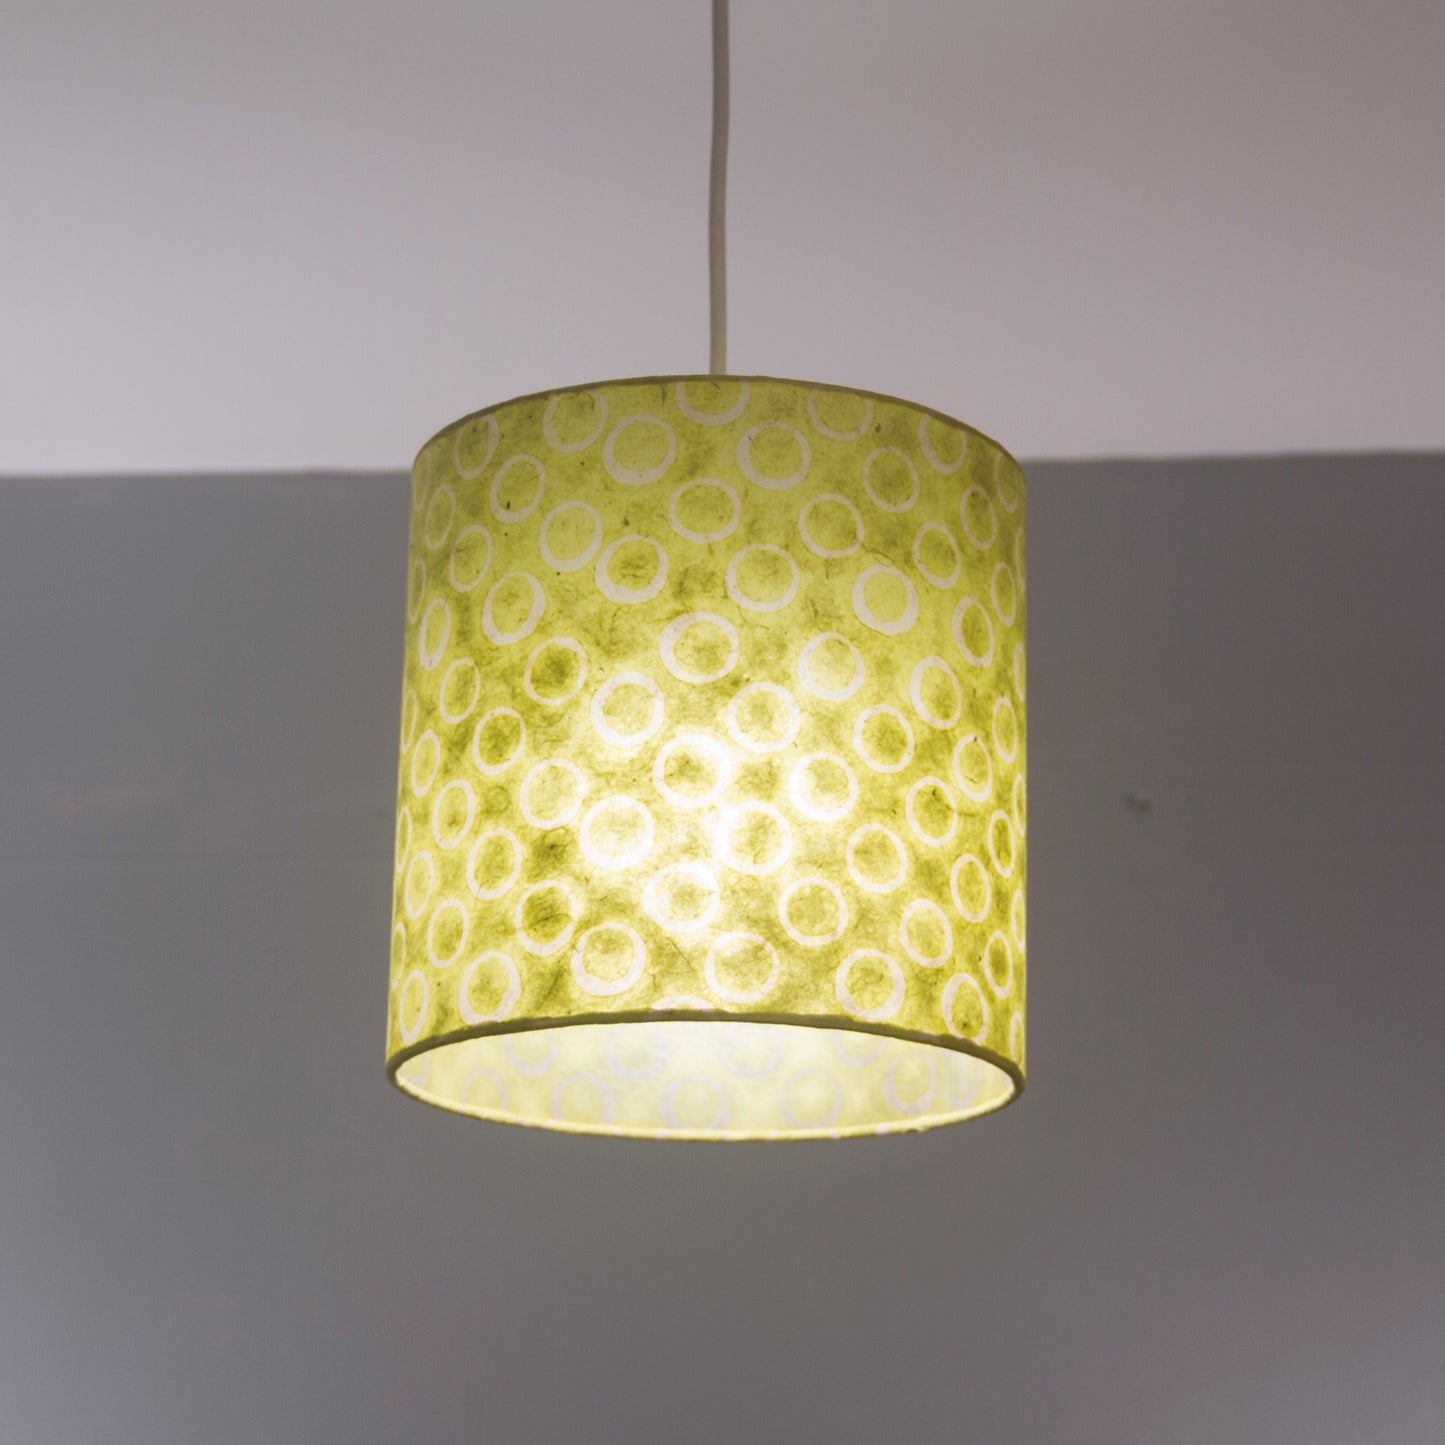 Conical Lamp Shade P02 - Batik Lime Circles, 23cm(top) x 35cm(bottom) x 31cm(height)